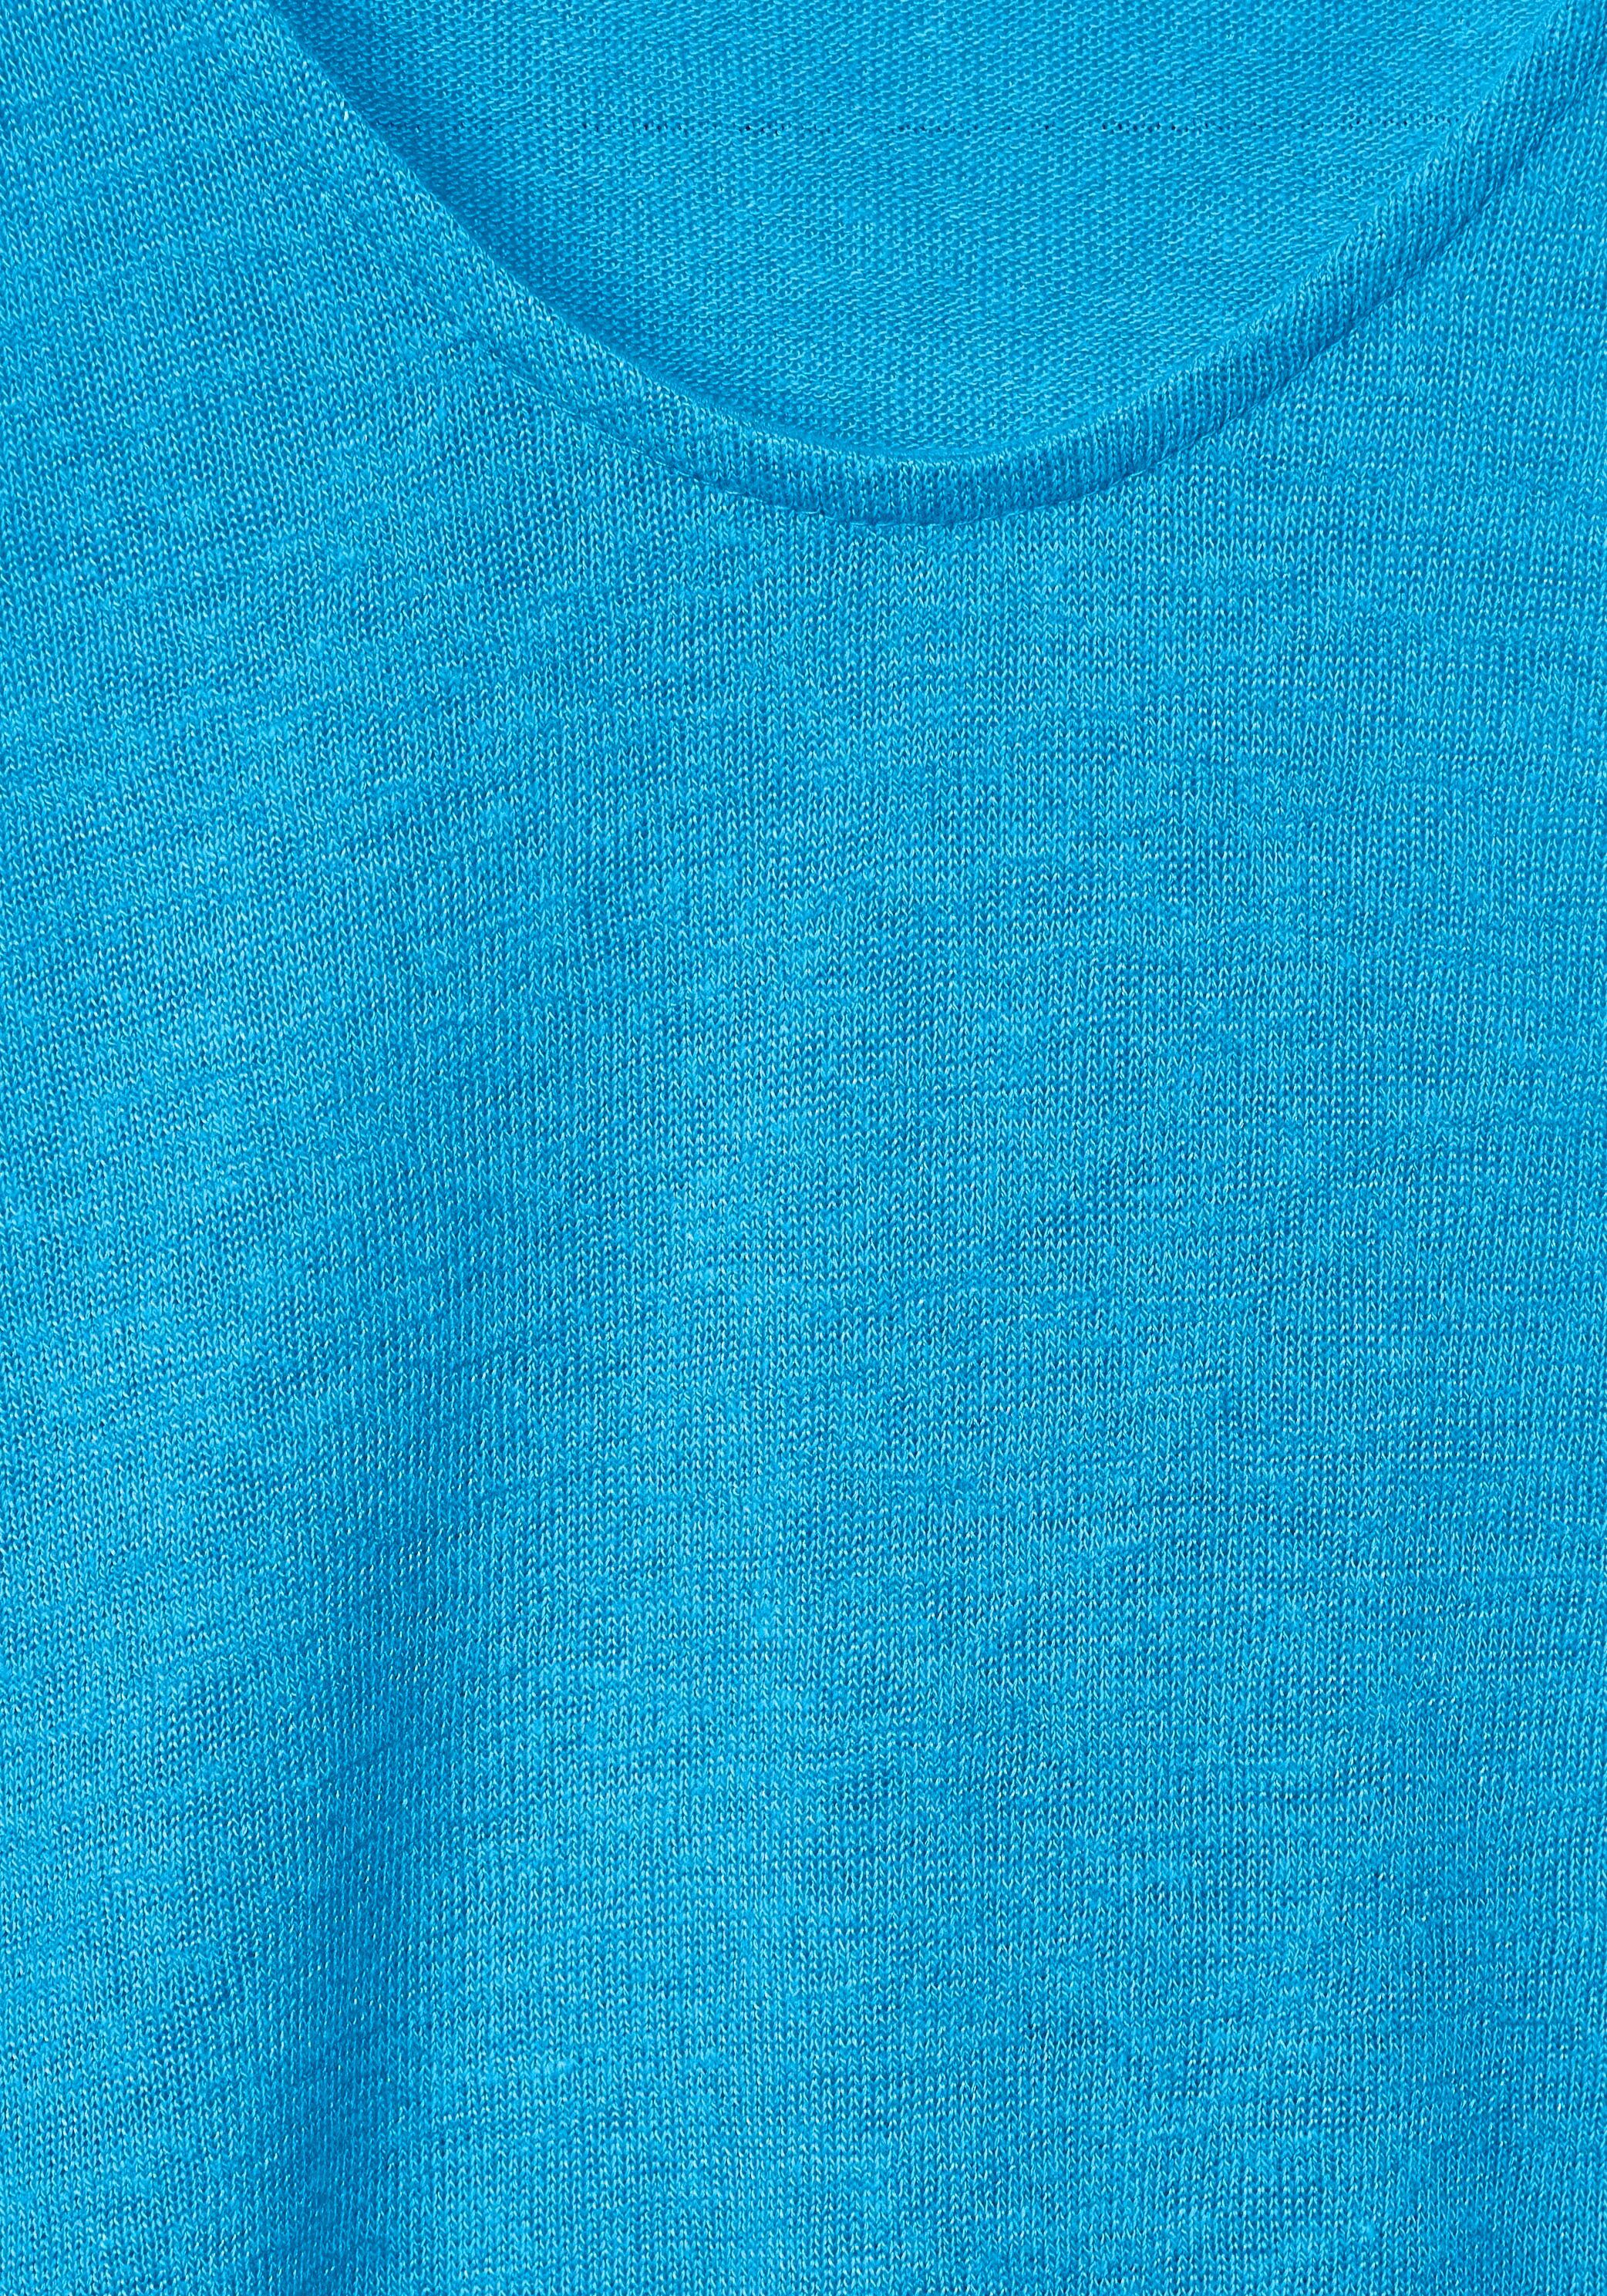 blue Kurzarmshirt in splash Optik unifarbener ONE STREET